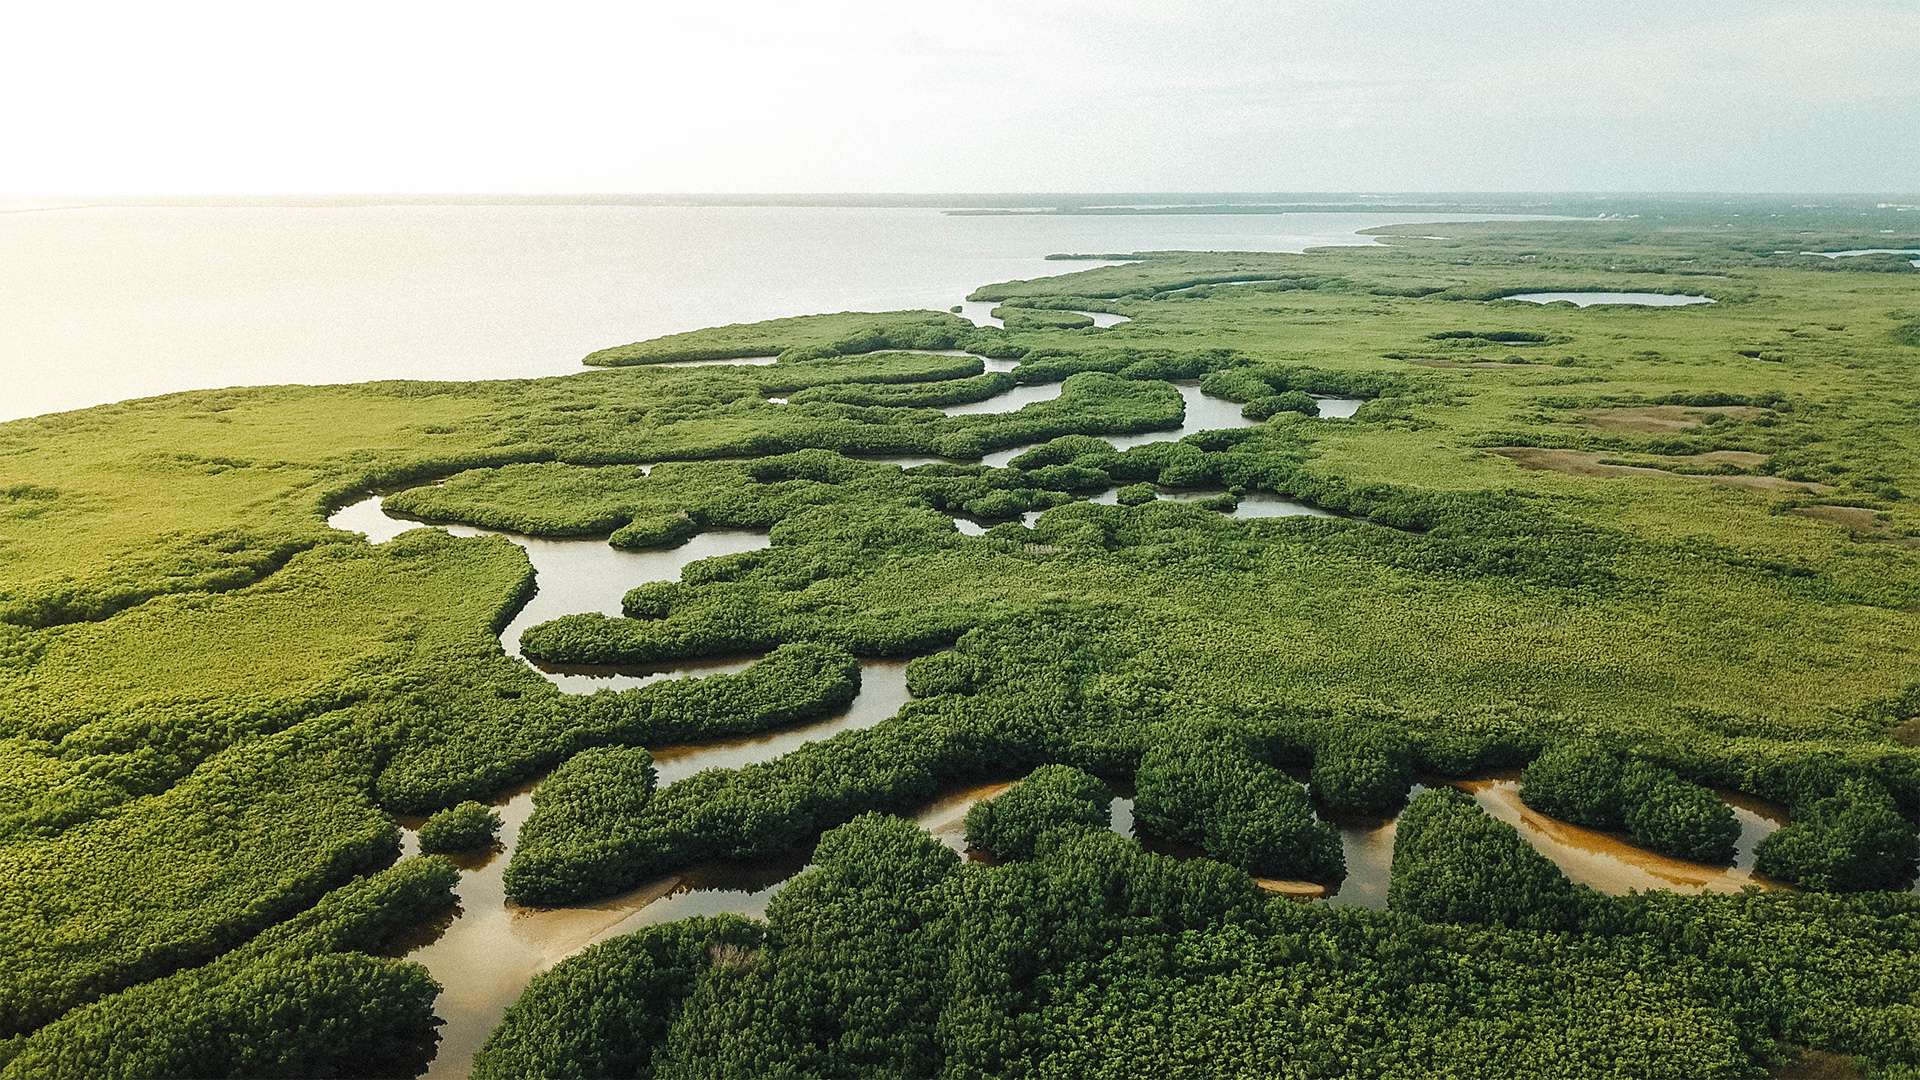 Florida river veins swampy waters muddy waters Everglades National Park